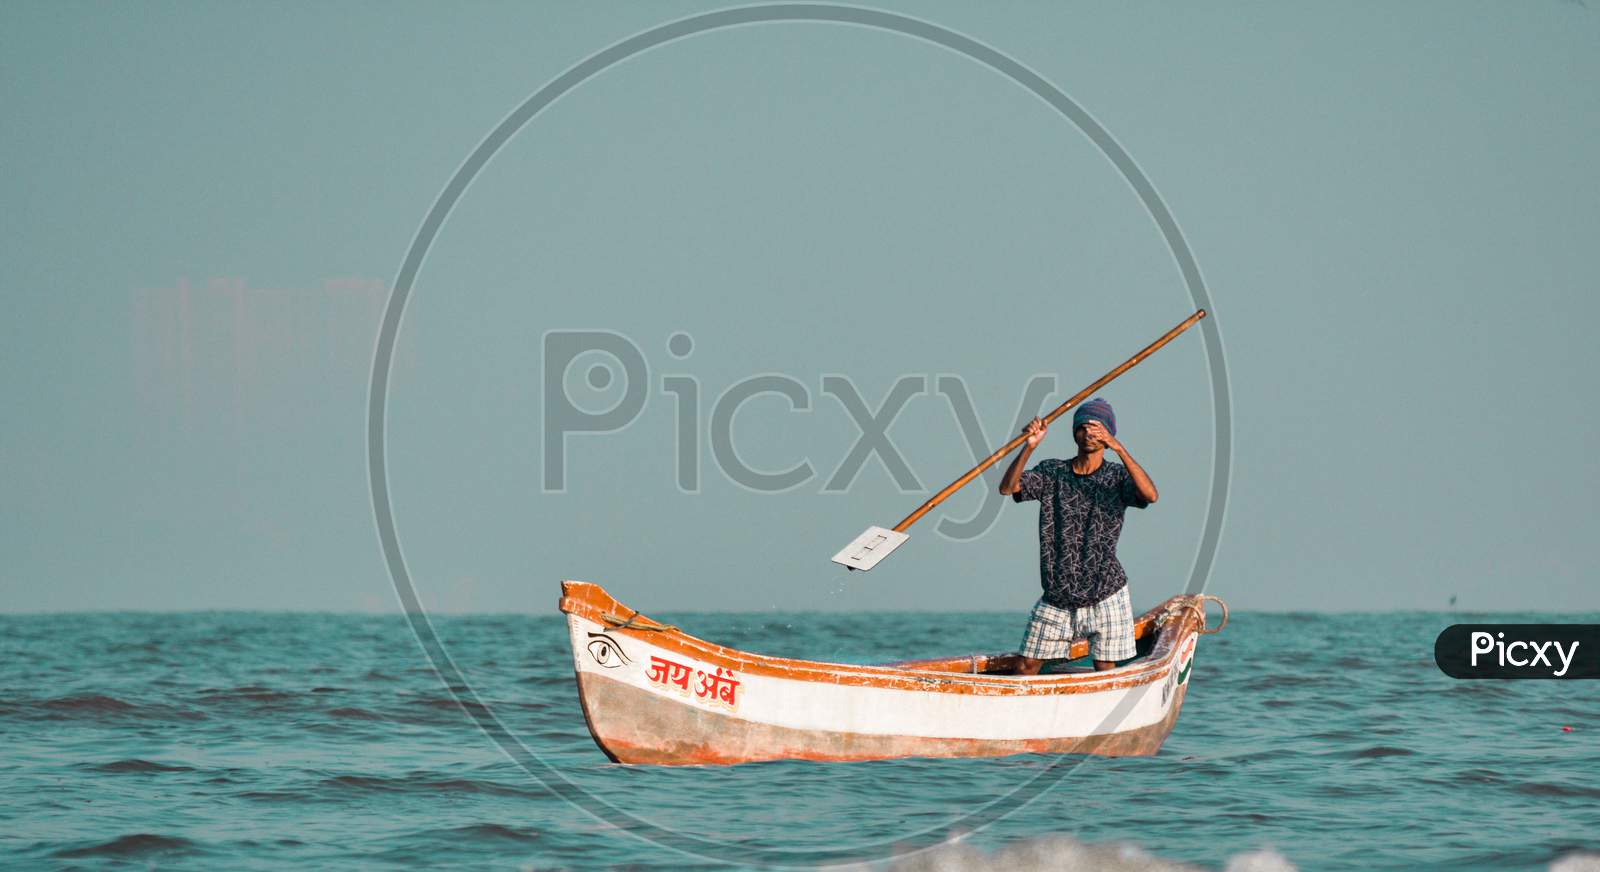 Fishermen at Juhu beach mumbai